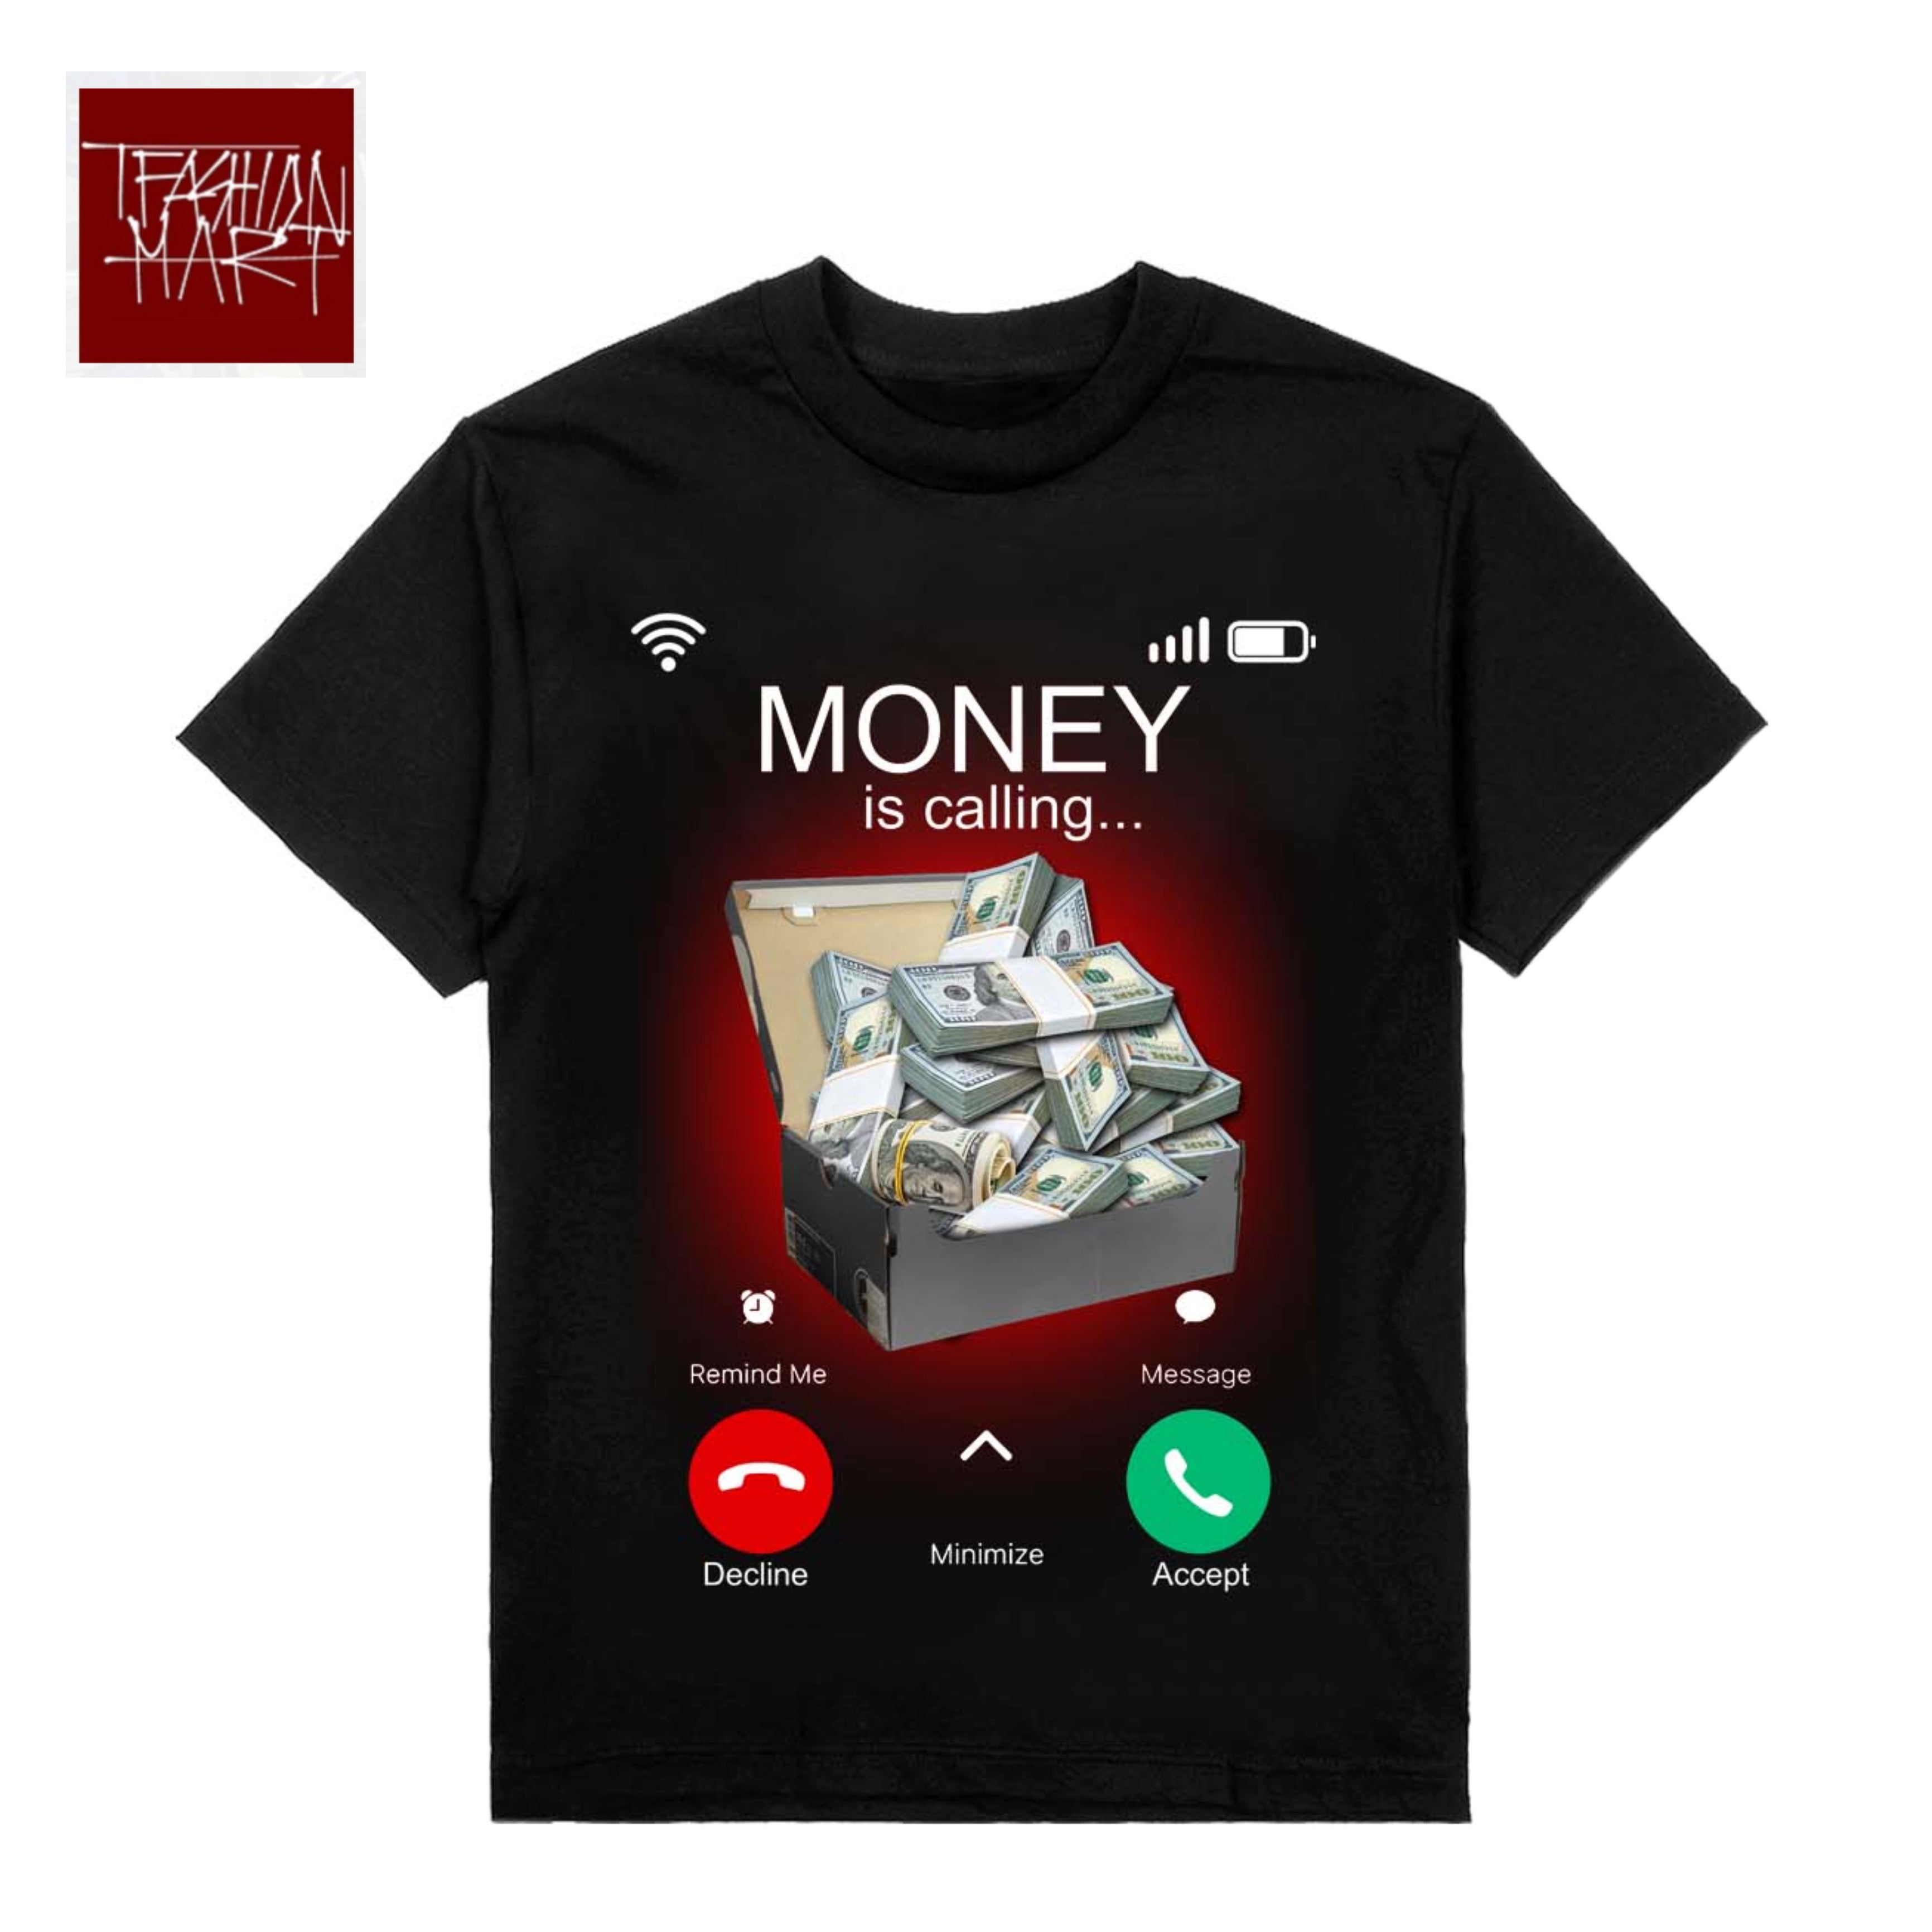 TFashion Graphic Tee - Money